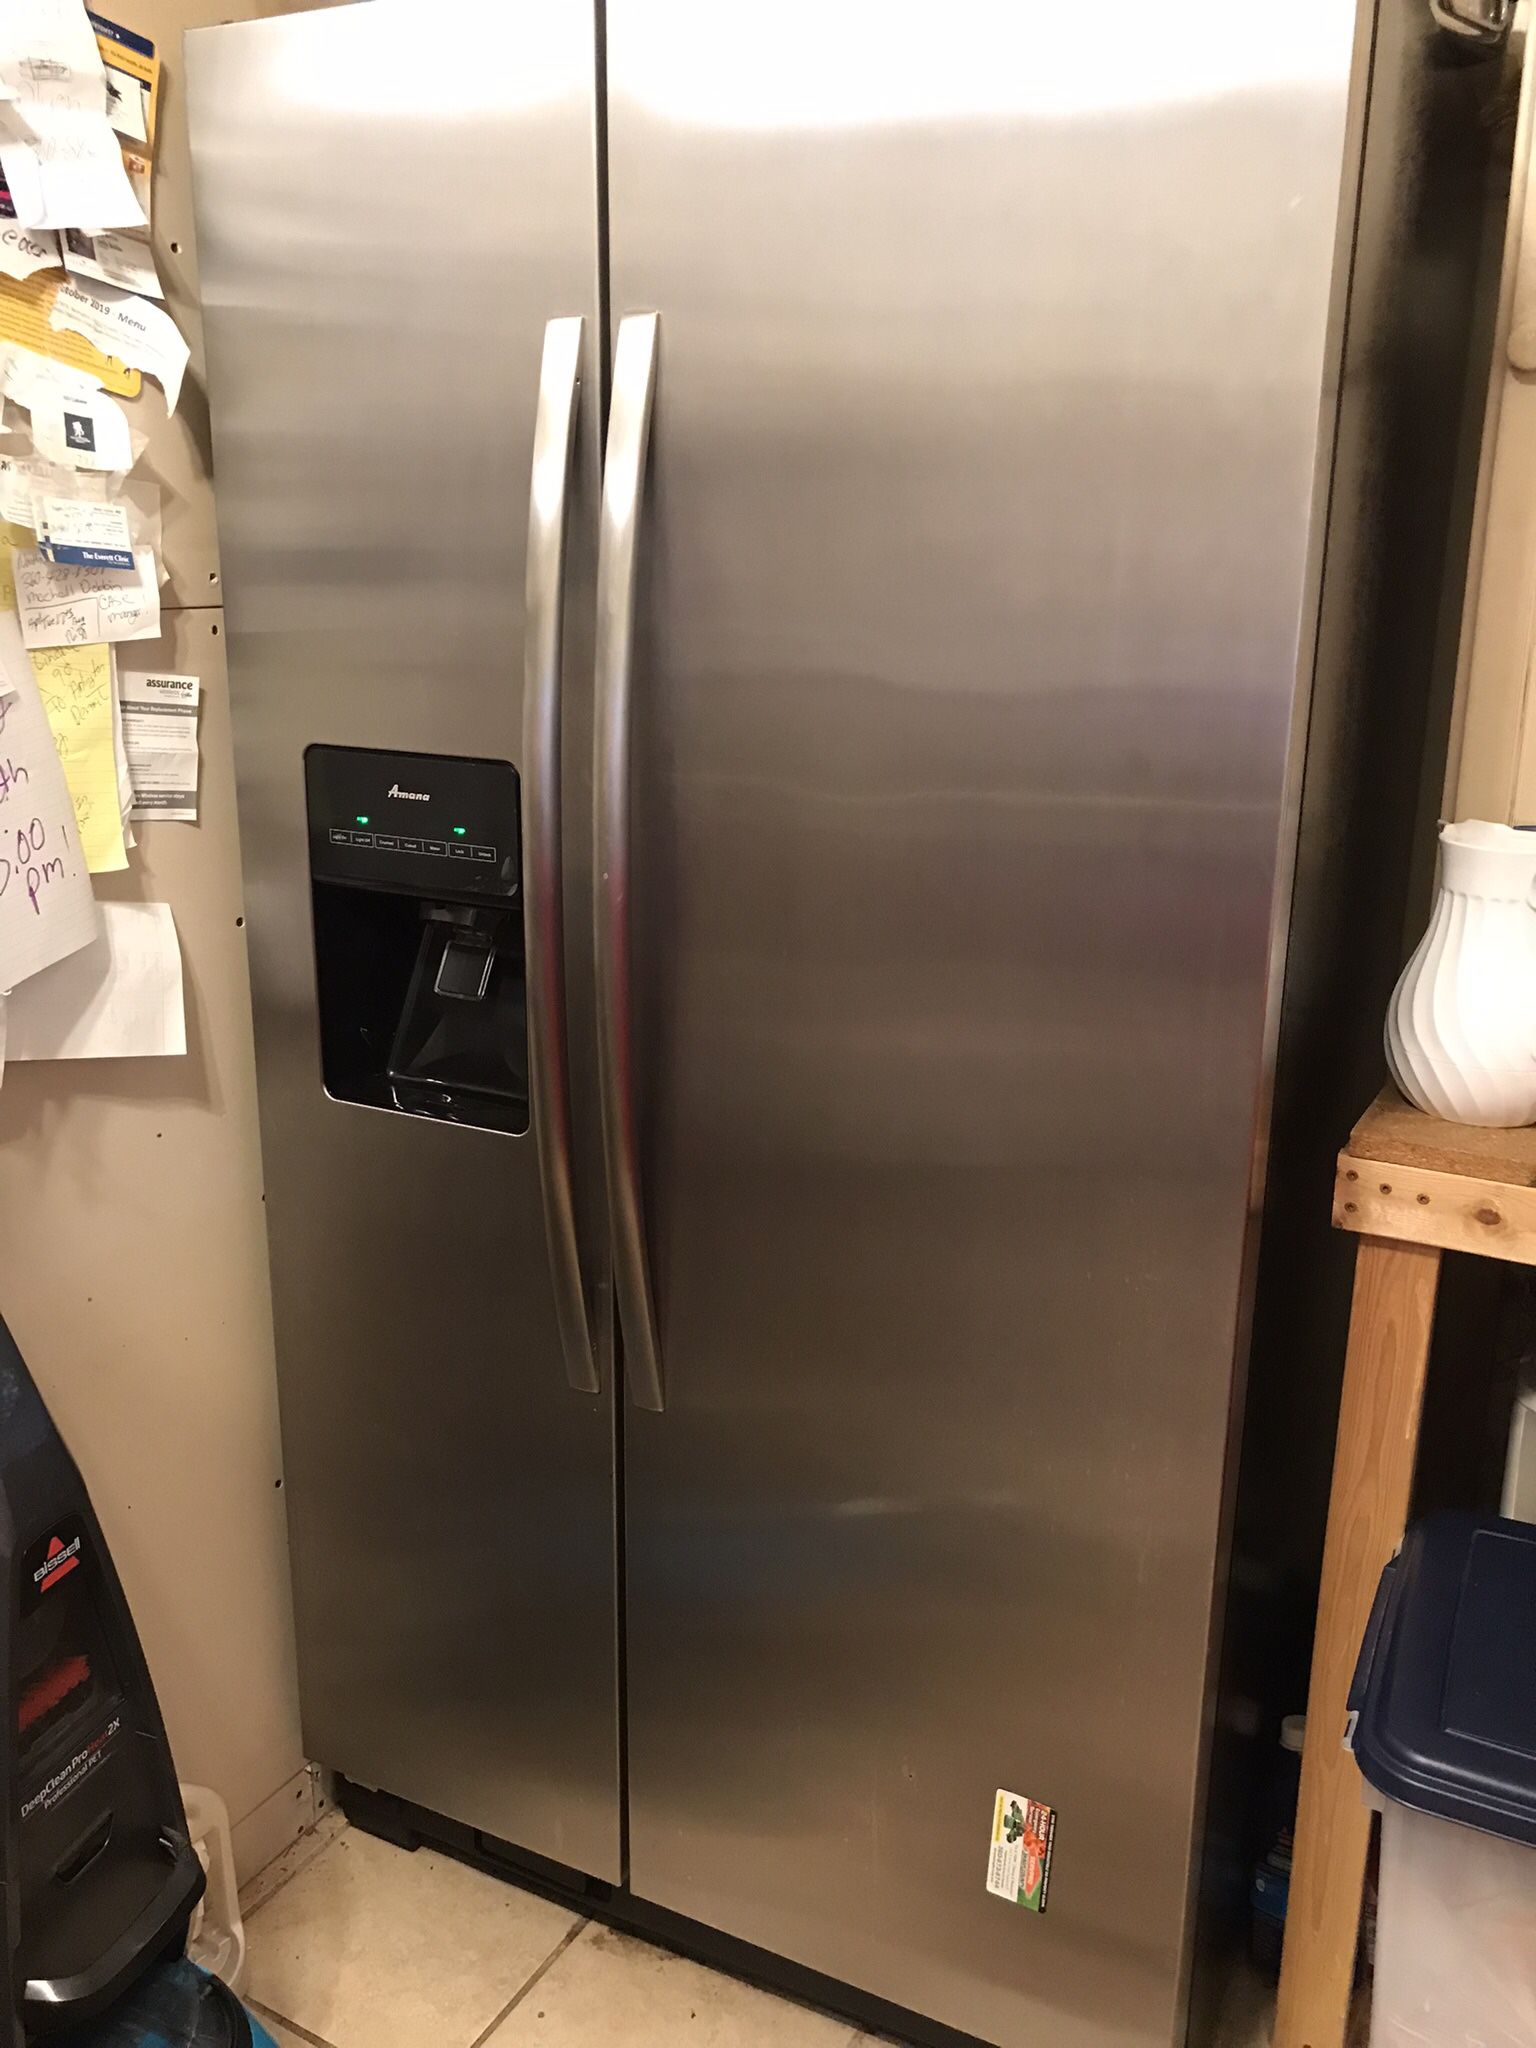 Amana Refrigerator And Freezer II